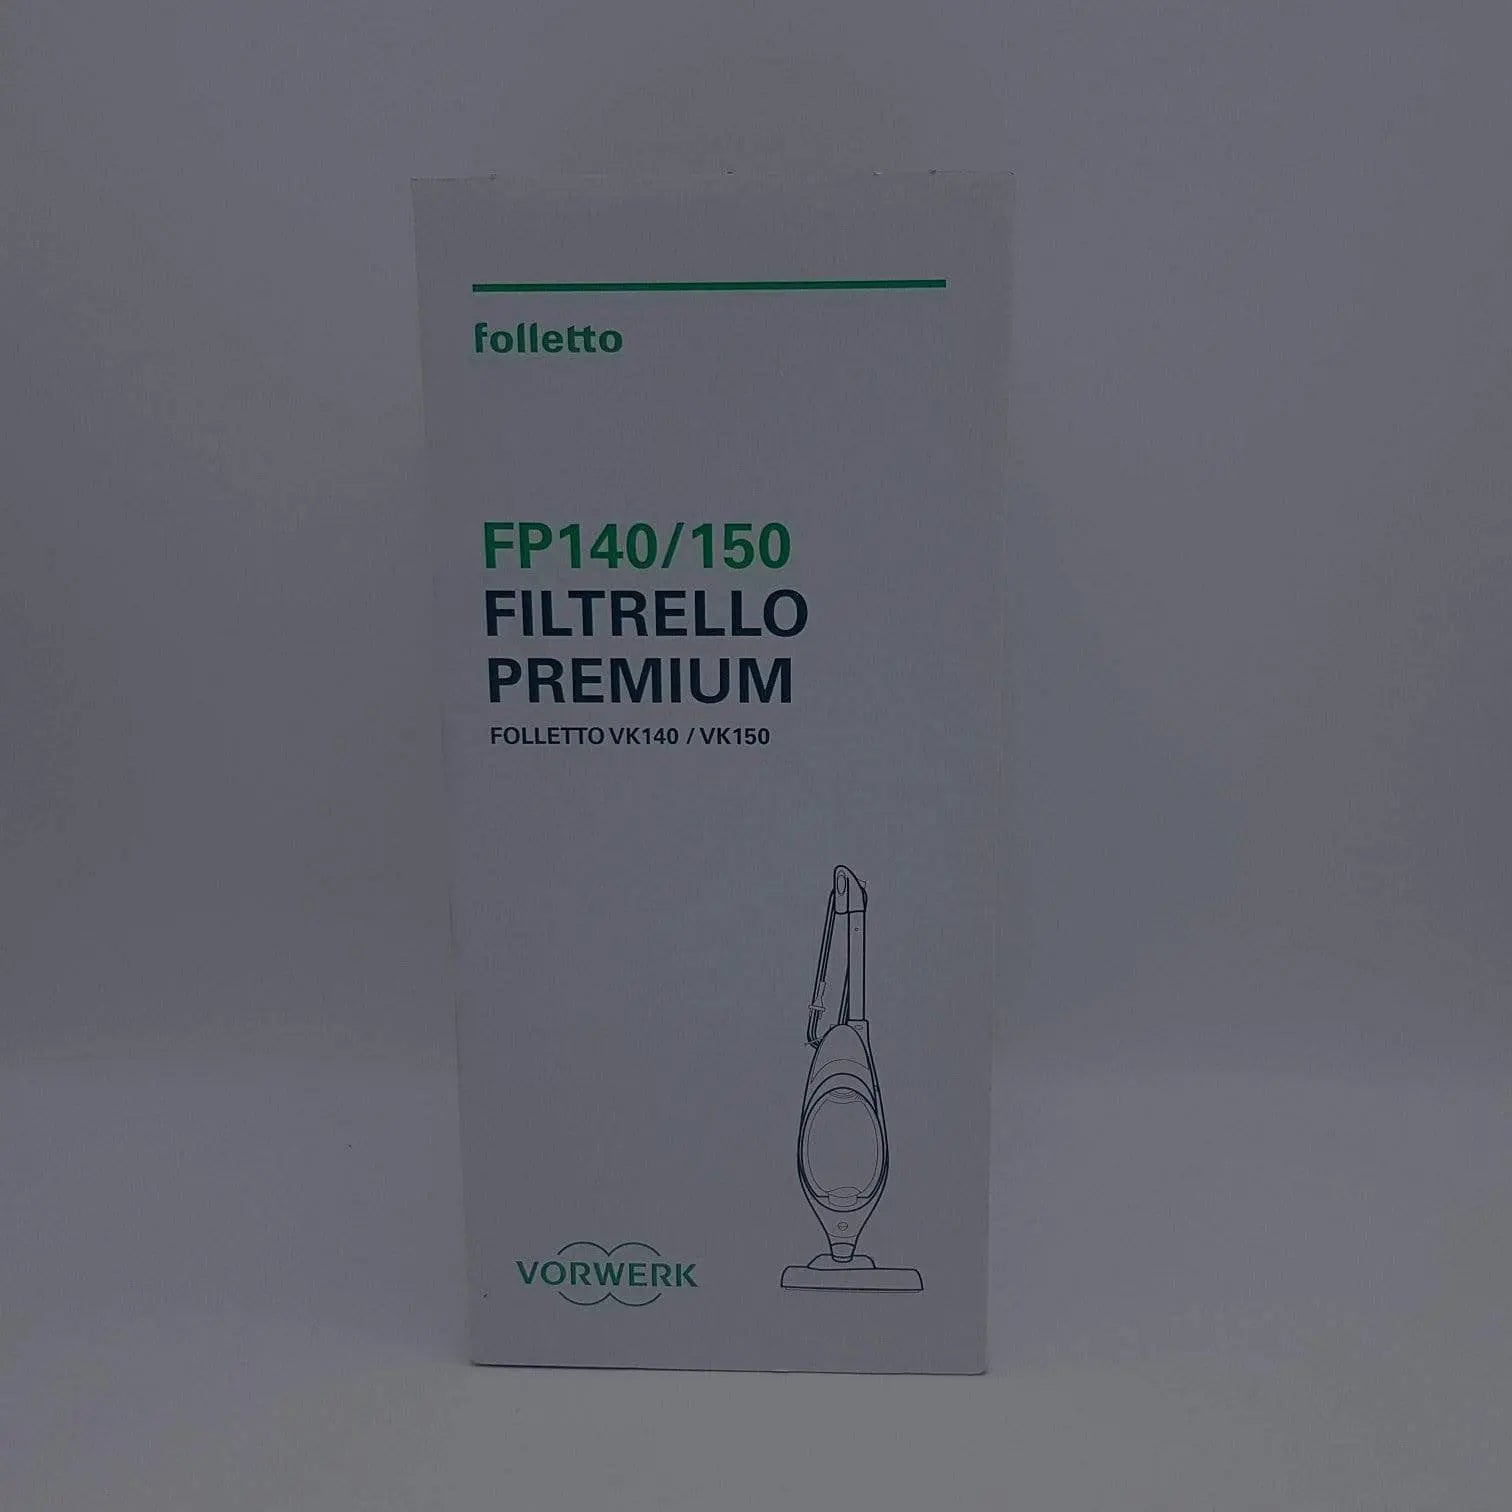 Confezione 6 sacchetti filtrello premium FP140 per VK140/VK150 Vorwerk Folletto VORWERK FOLLETTO